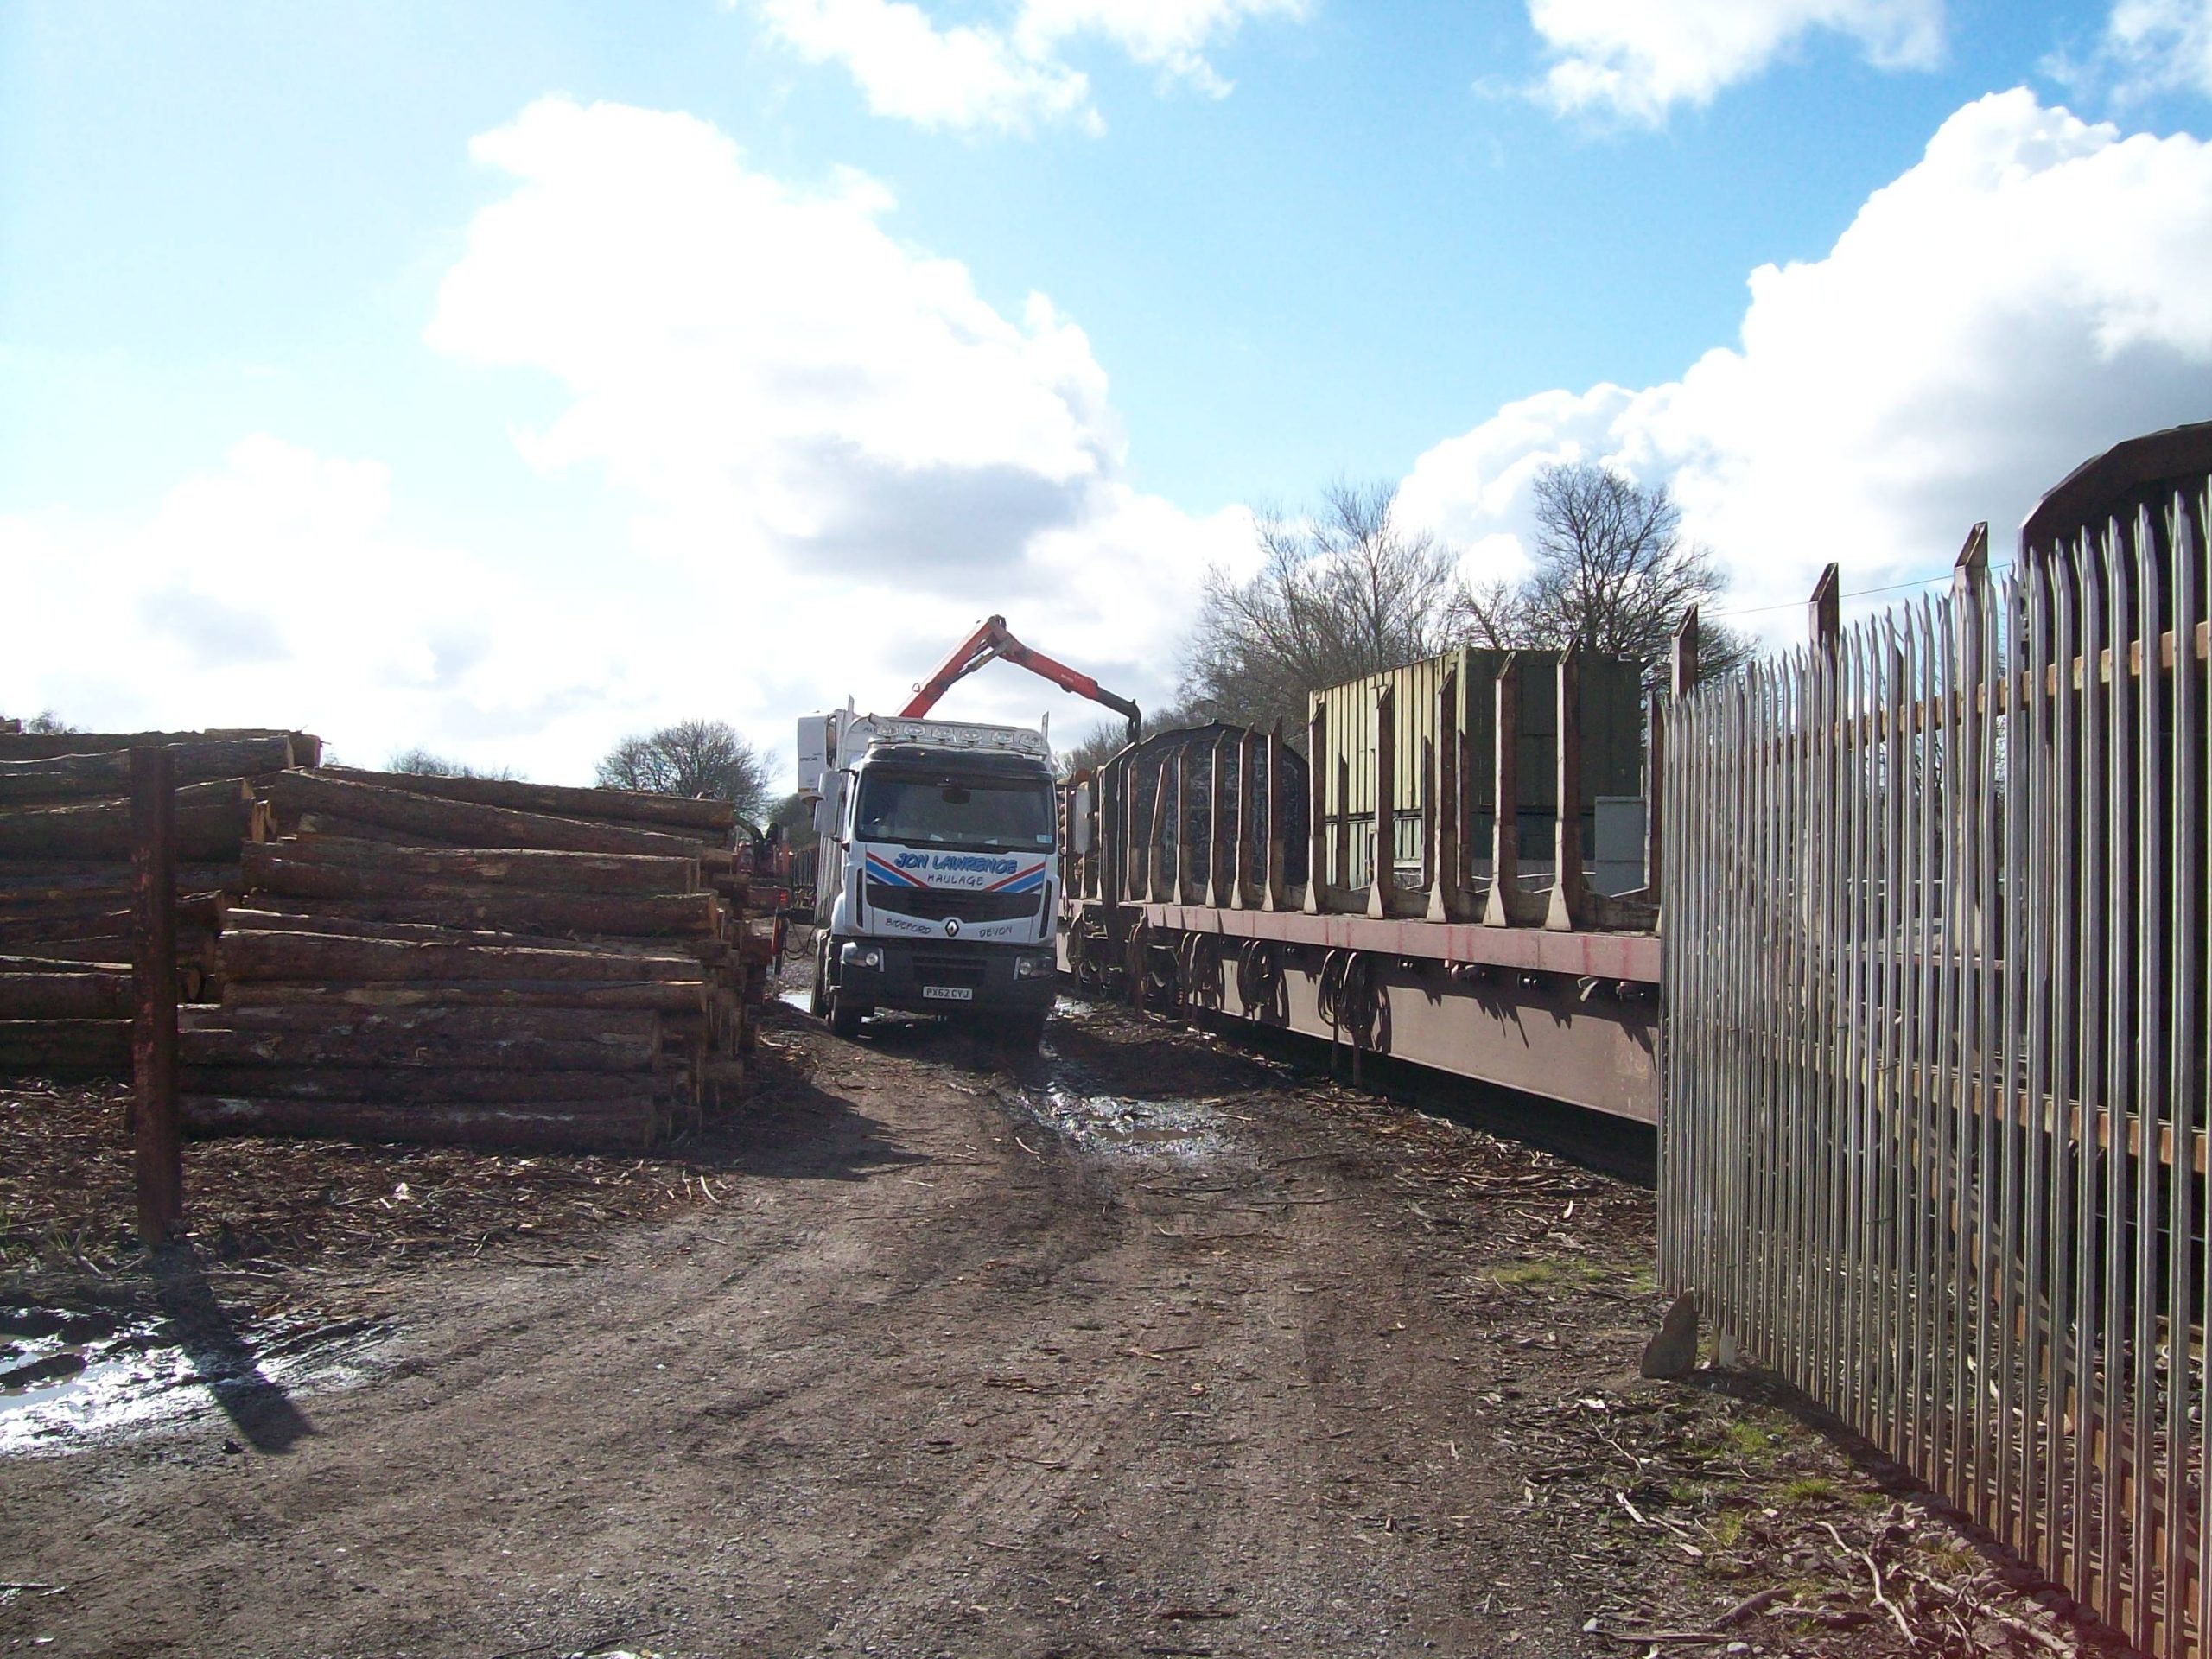 Logs being loaded at Teignbridge.